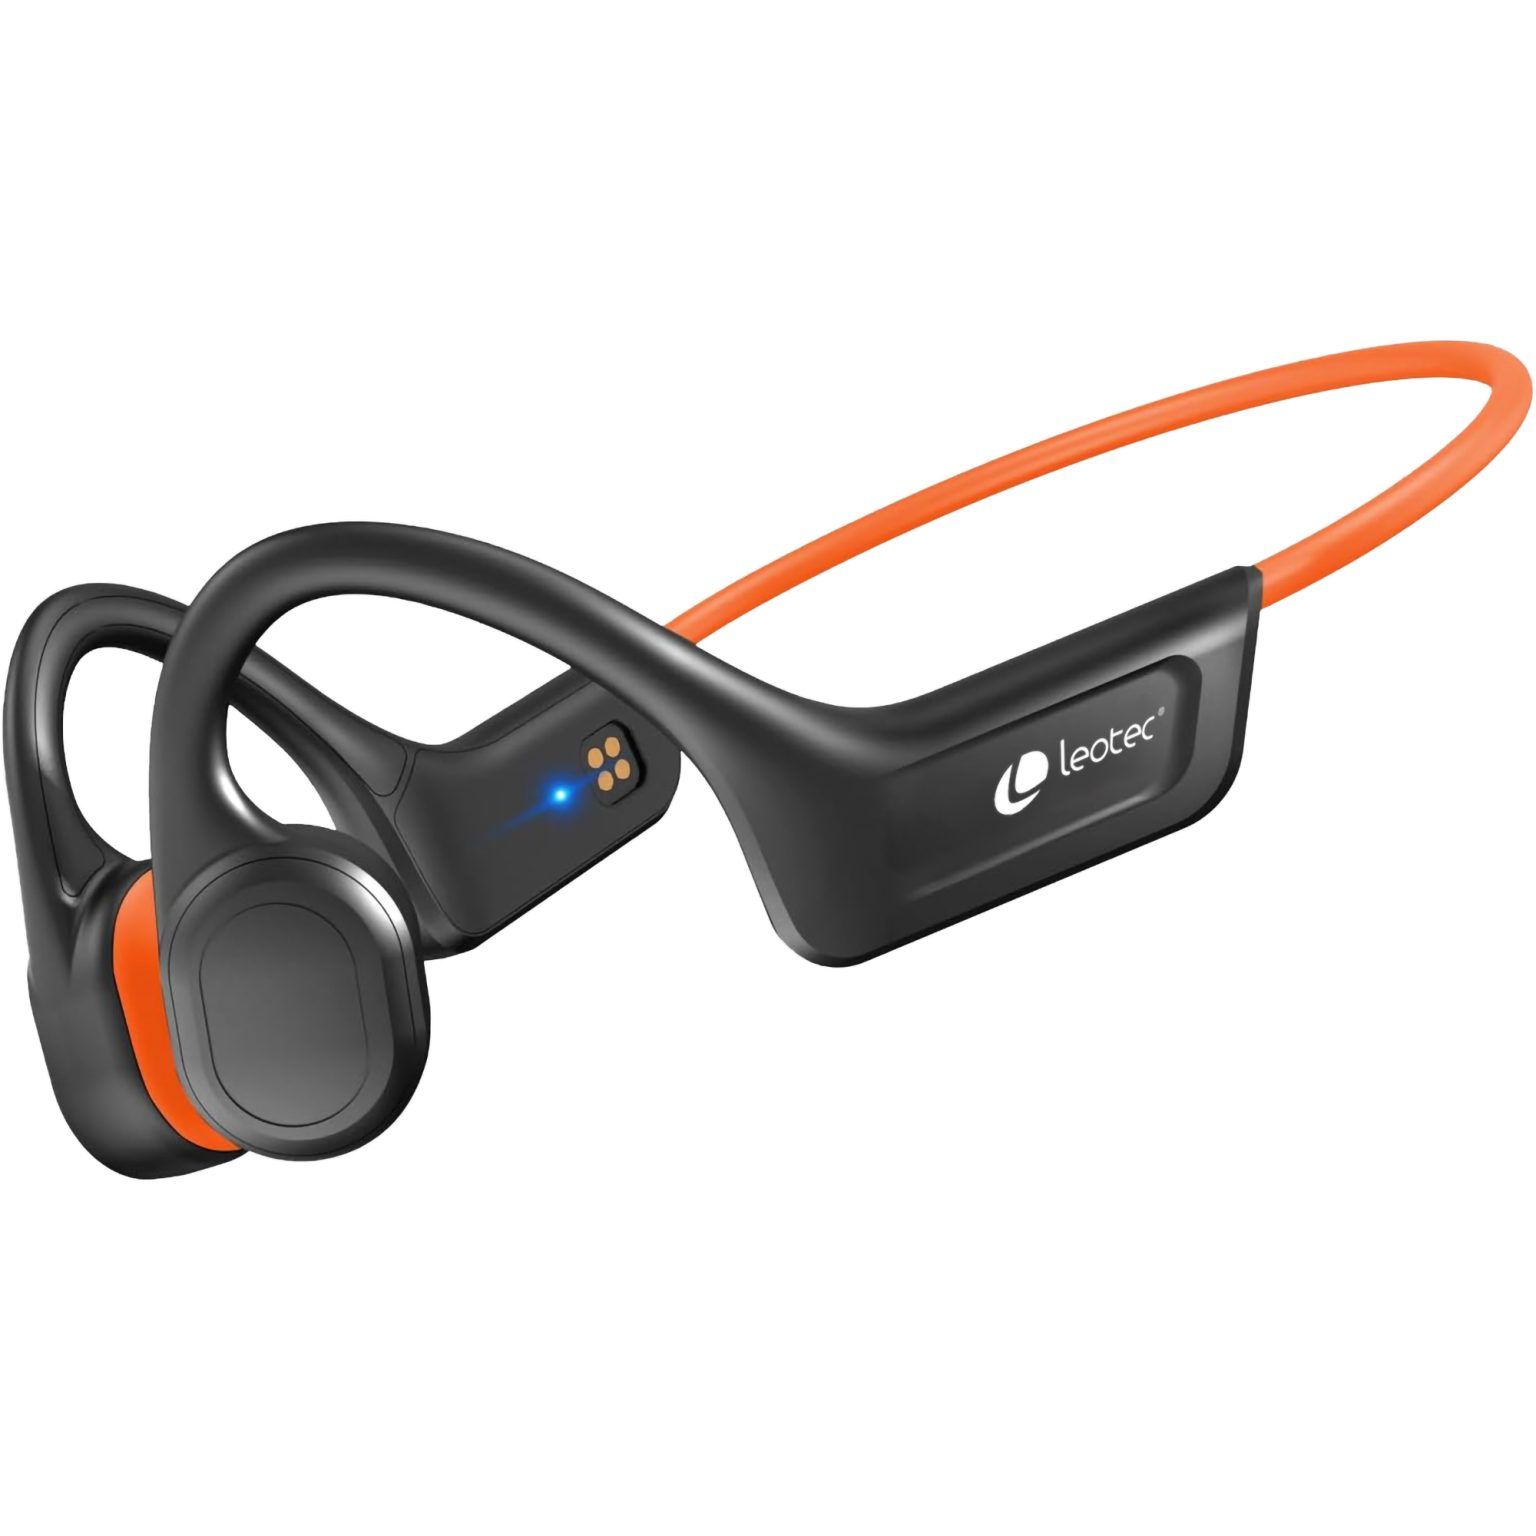 https://www.axartoner.com/images/productos/leotec-run-pro-auriculares-deportivos-de-conduccion-osea-bluetooth-5-3-bateria-de-230mah-resistencia-ipx7-color-negro-naranja.jpg